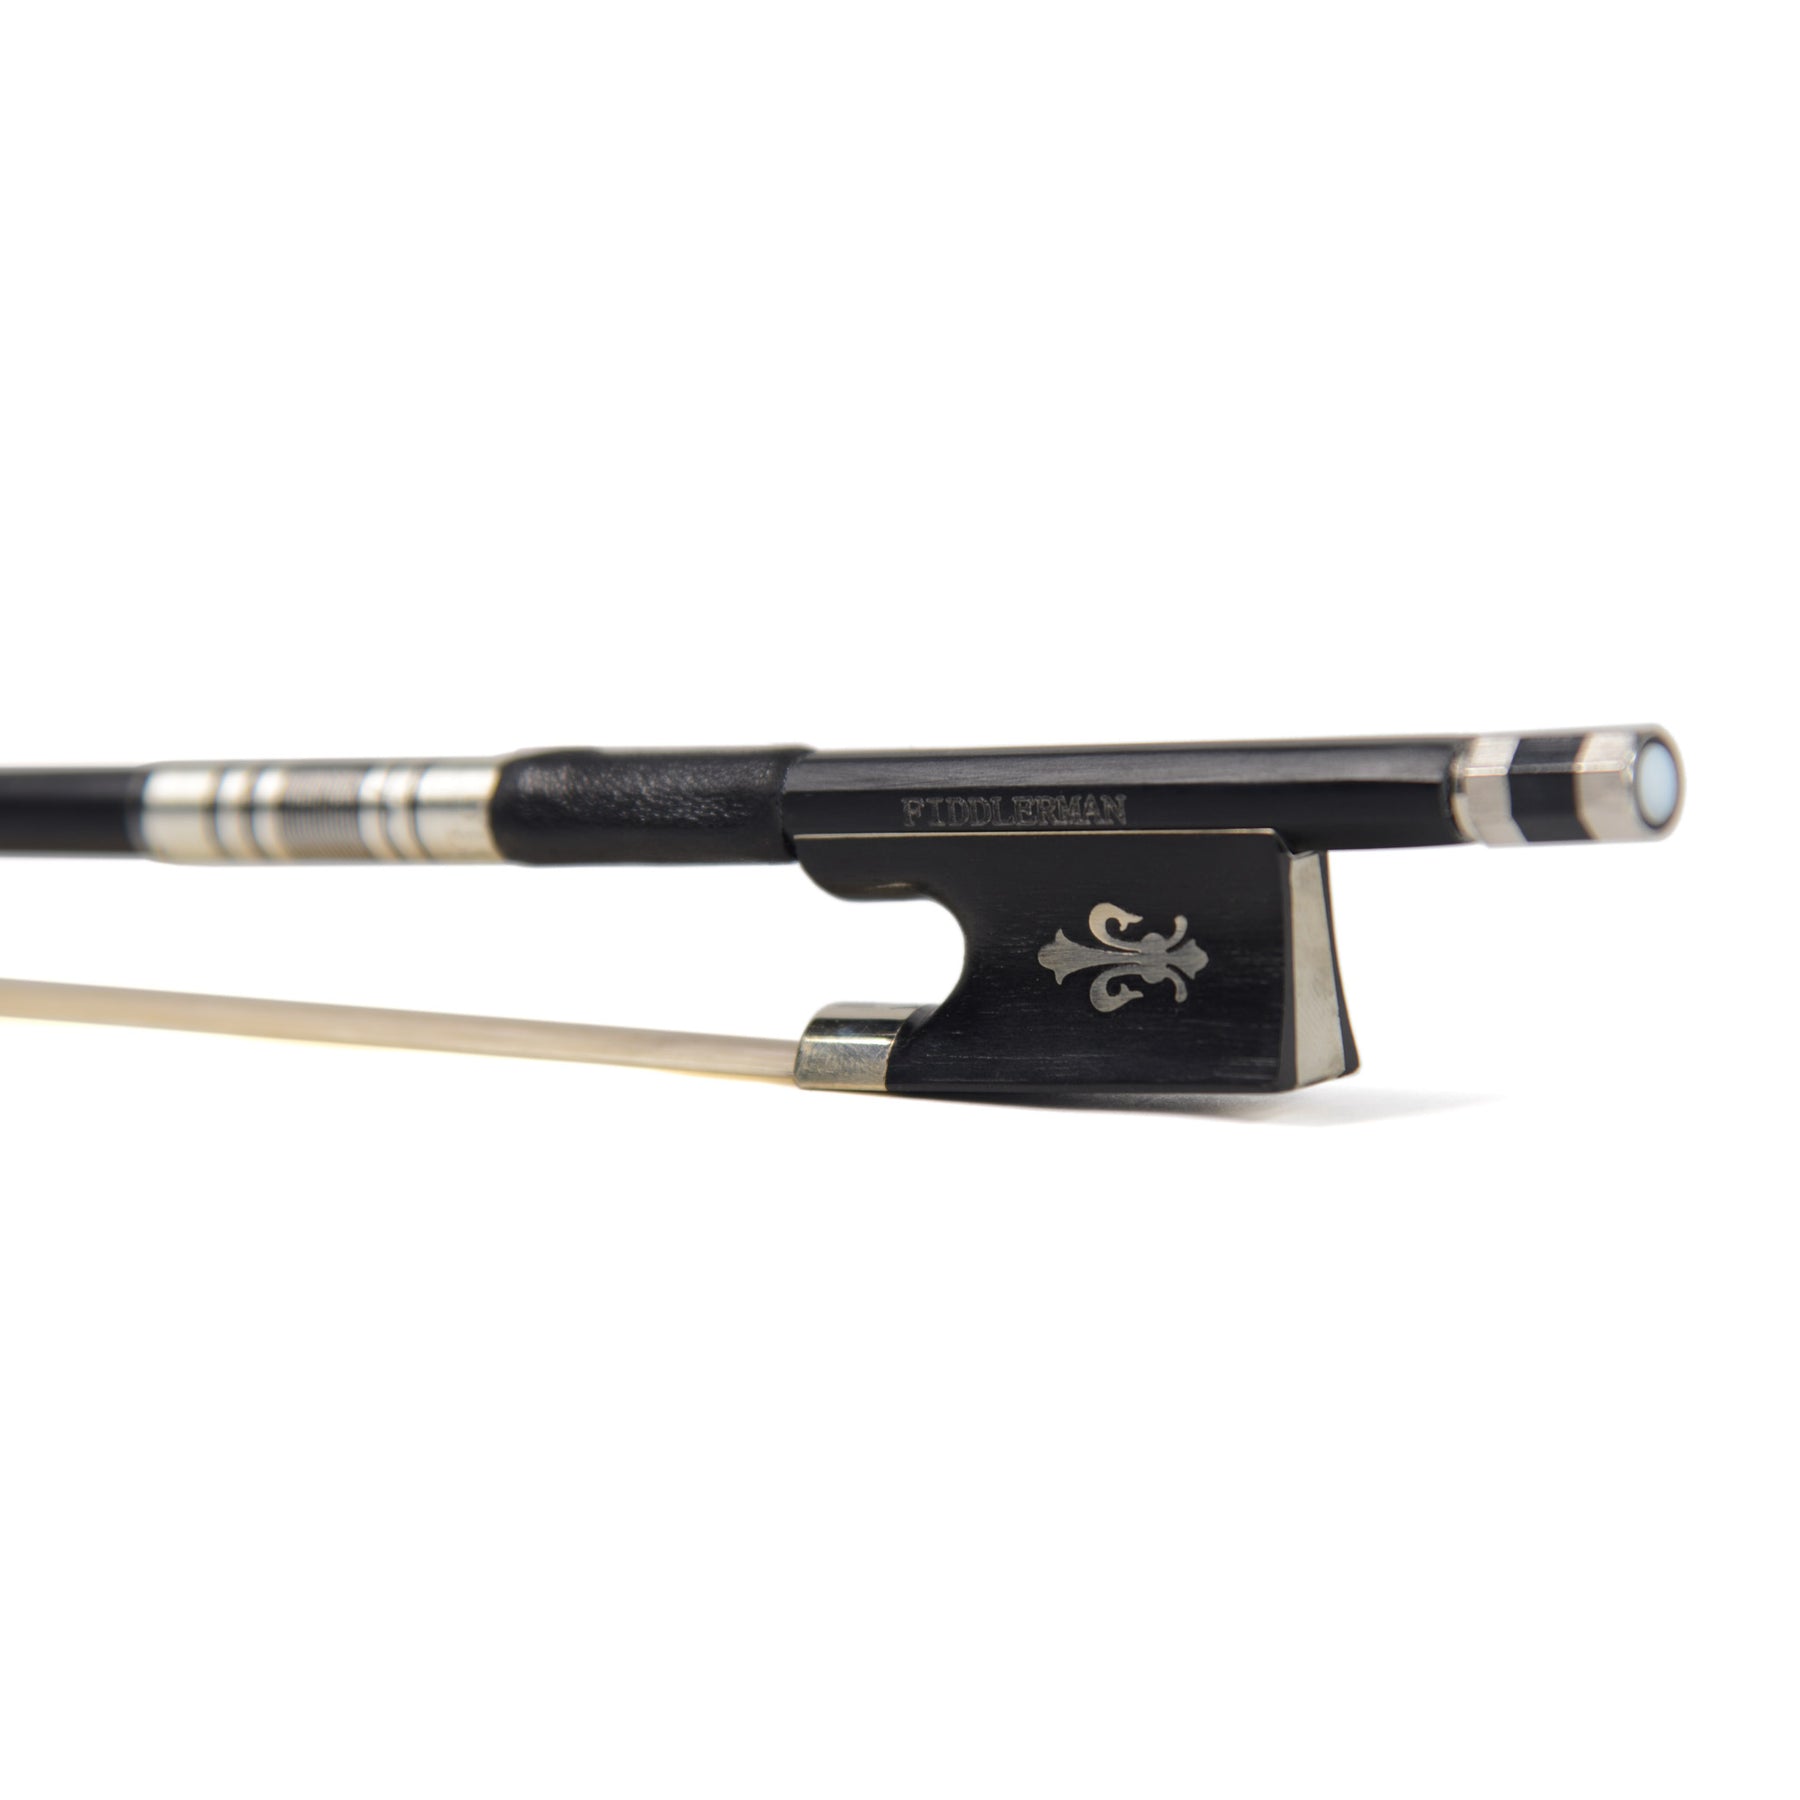 B-Stock Fiddlerman Carbon Fiber Violin Bow (Previous Model)